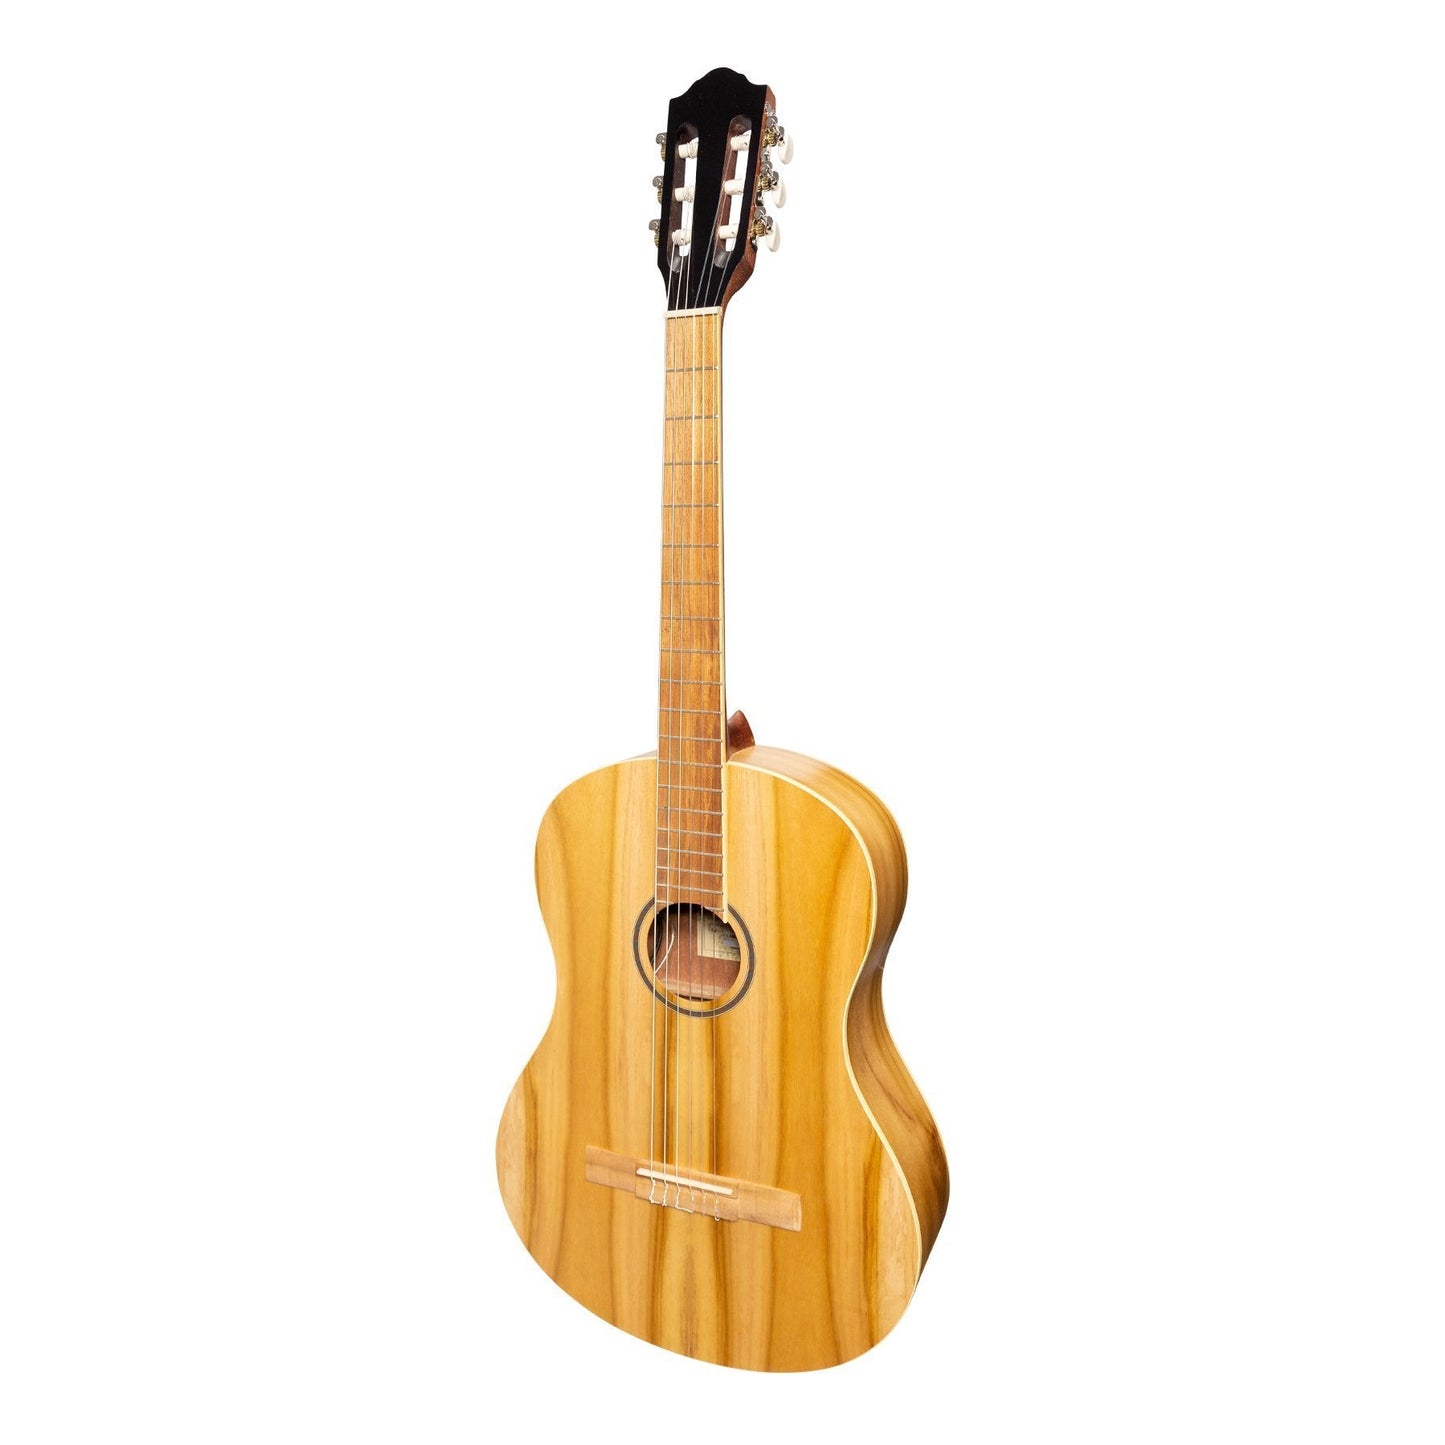 Martinez 'Slim Jim' Full Size Electric Classical Guitar with Pickup/Tuner (Jati-Teakwood)